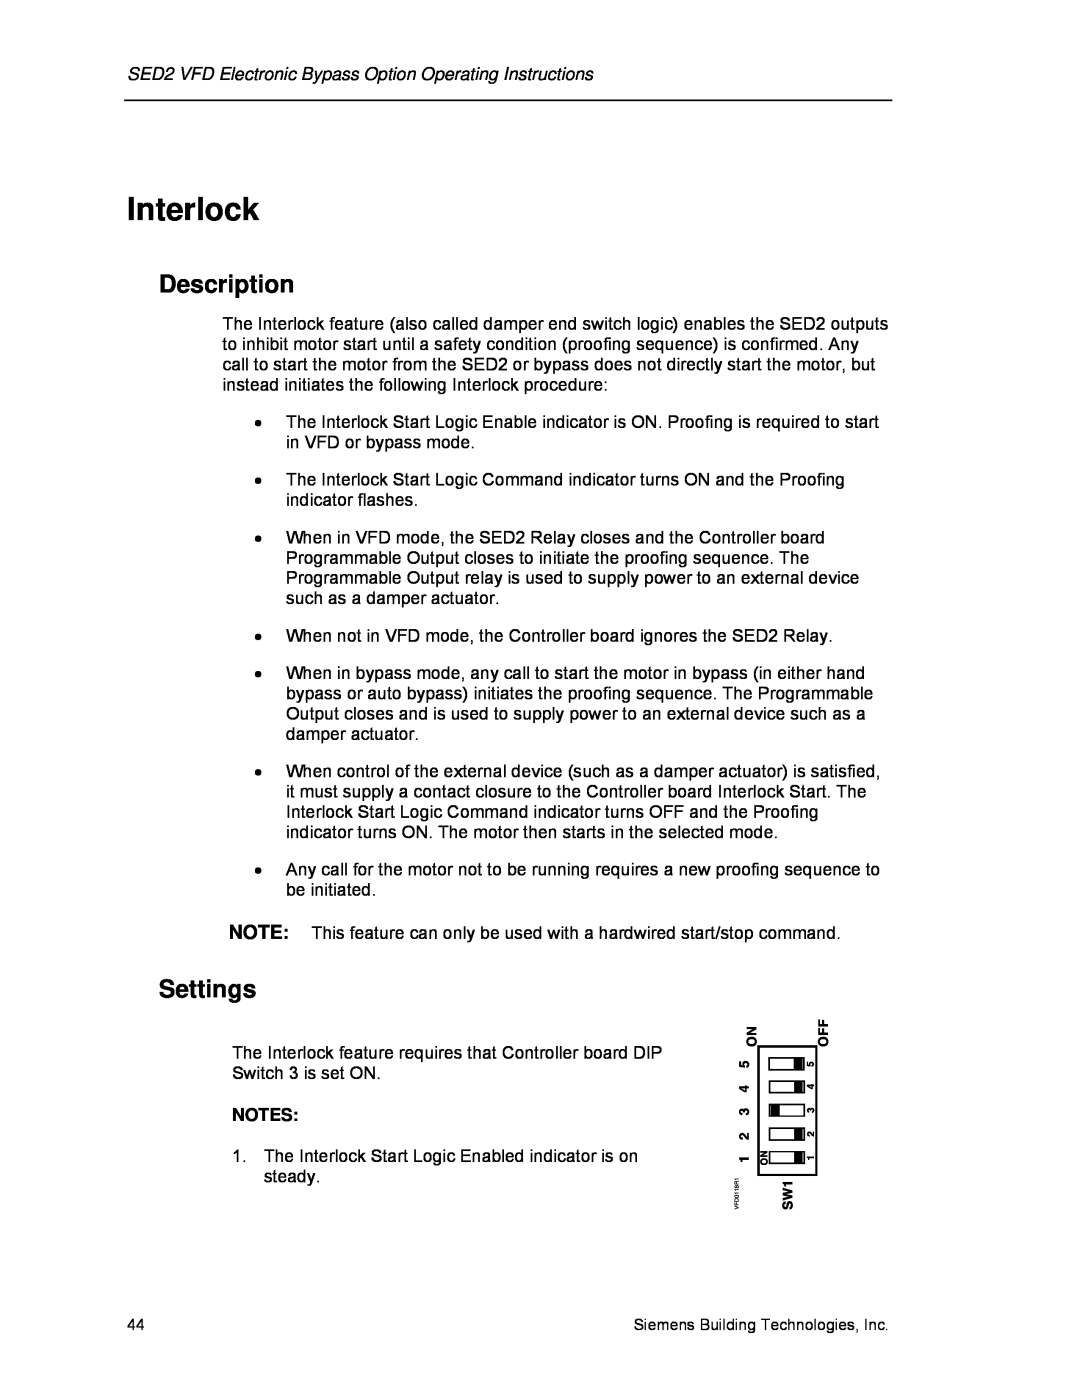 Siemens 125-3208 operating instructions Interlock, Description, Settings, Siemens Building Technologies, Inc 